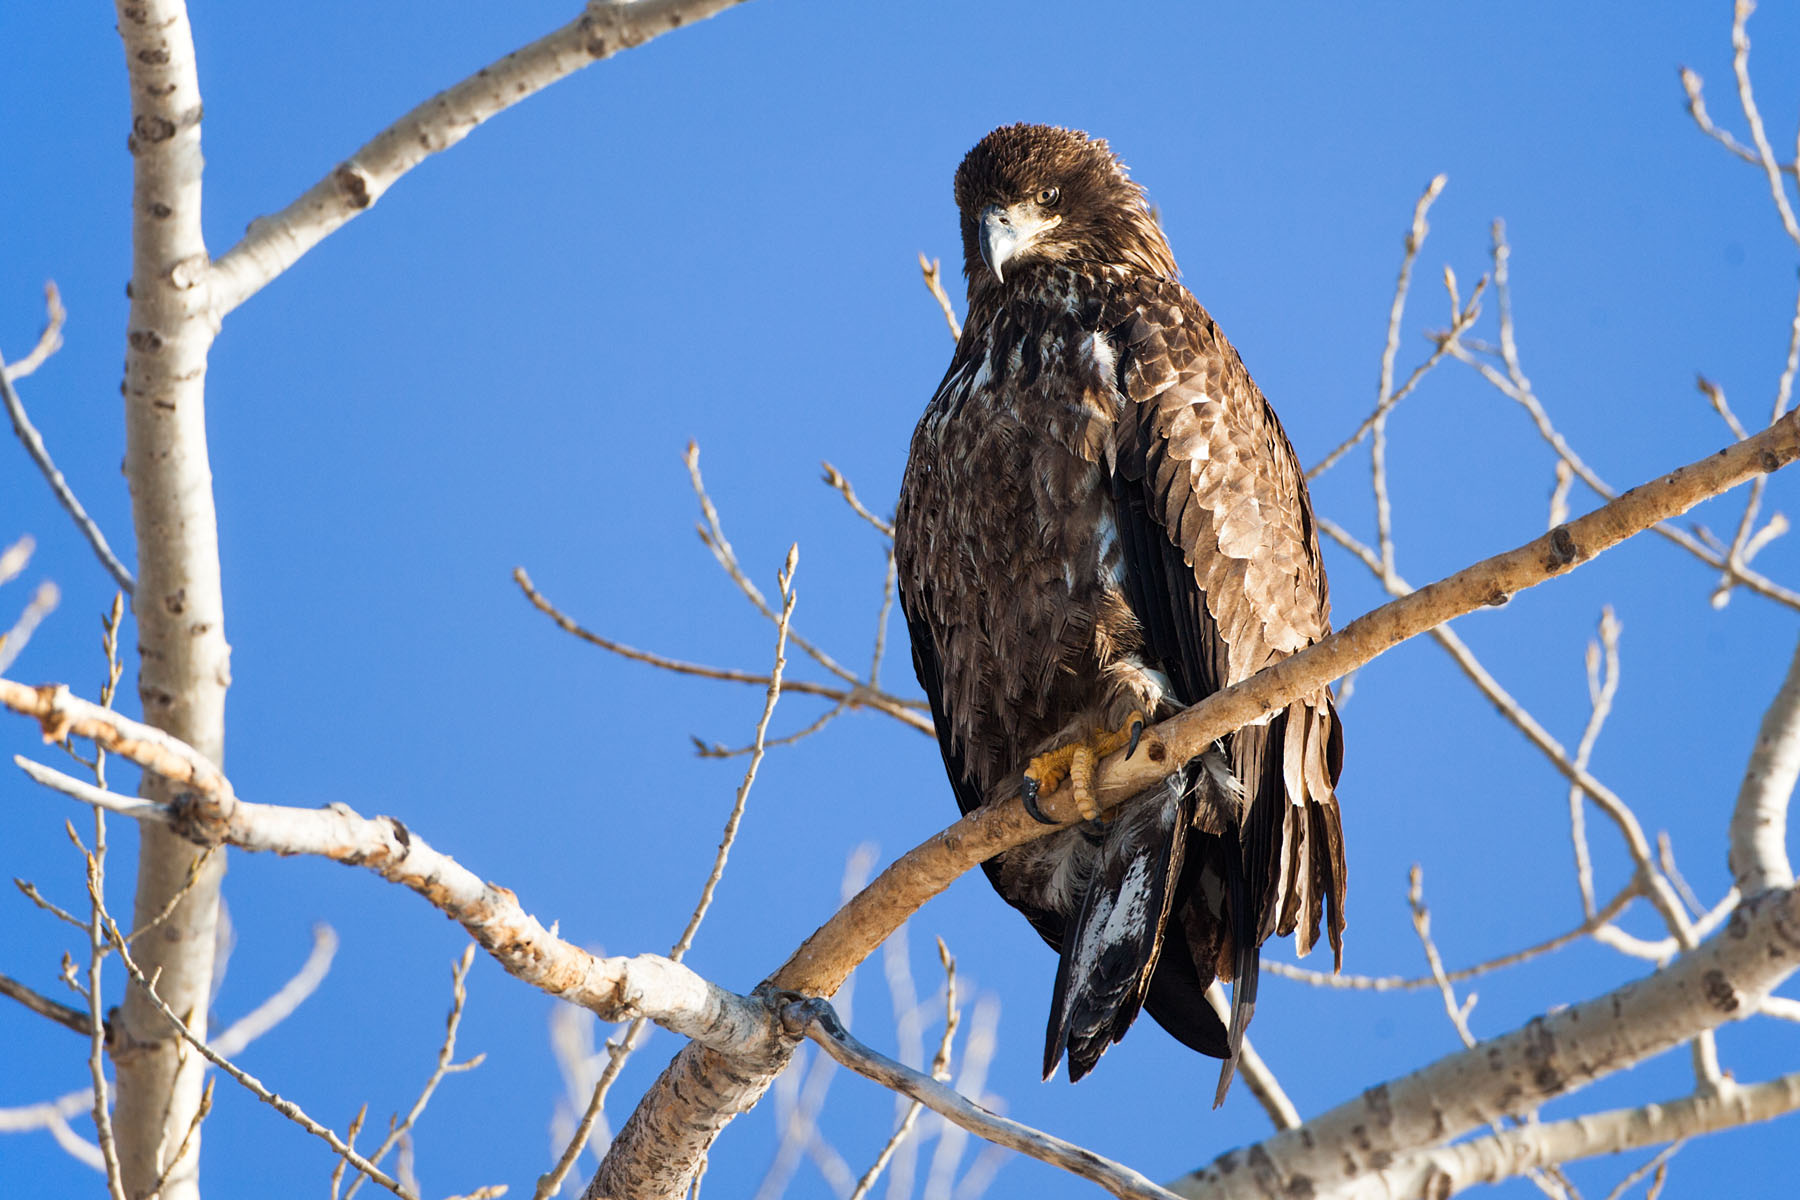 Juvenile bald eagle, Ft. Randall dam, South Dakota.  Click for next photo.